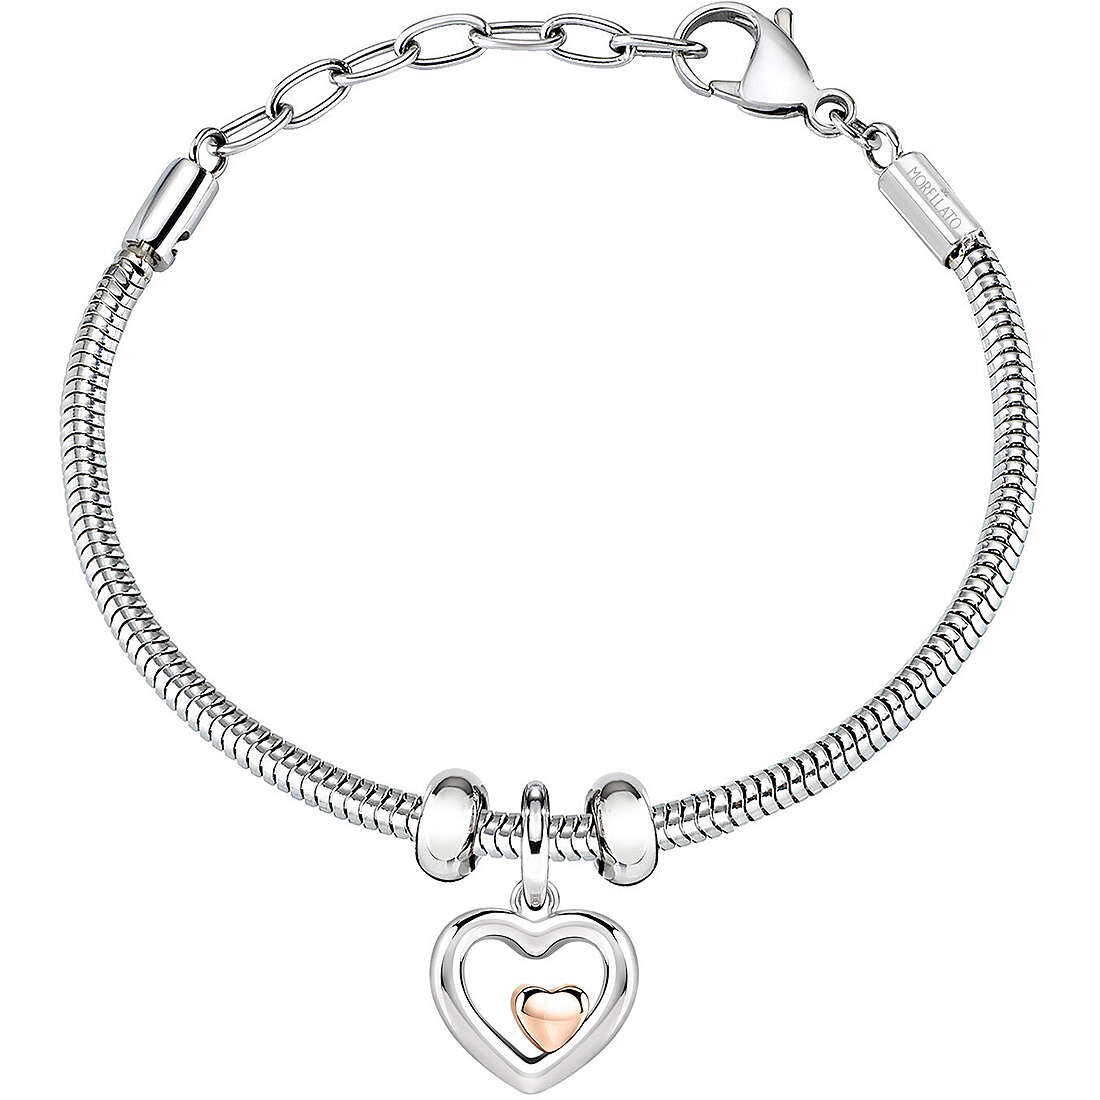 bracelet femme bijoux Morellato Drops SCZ1096